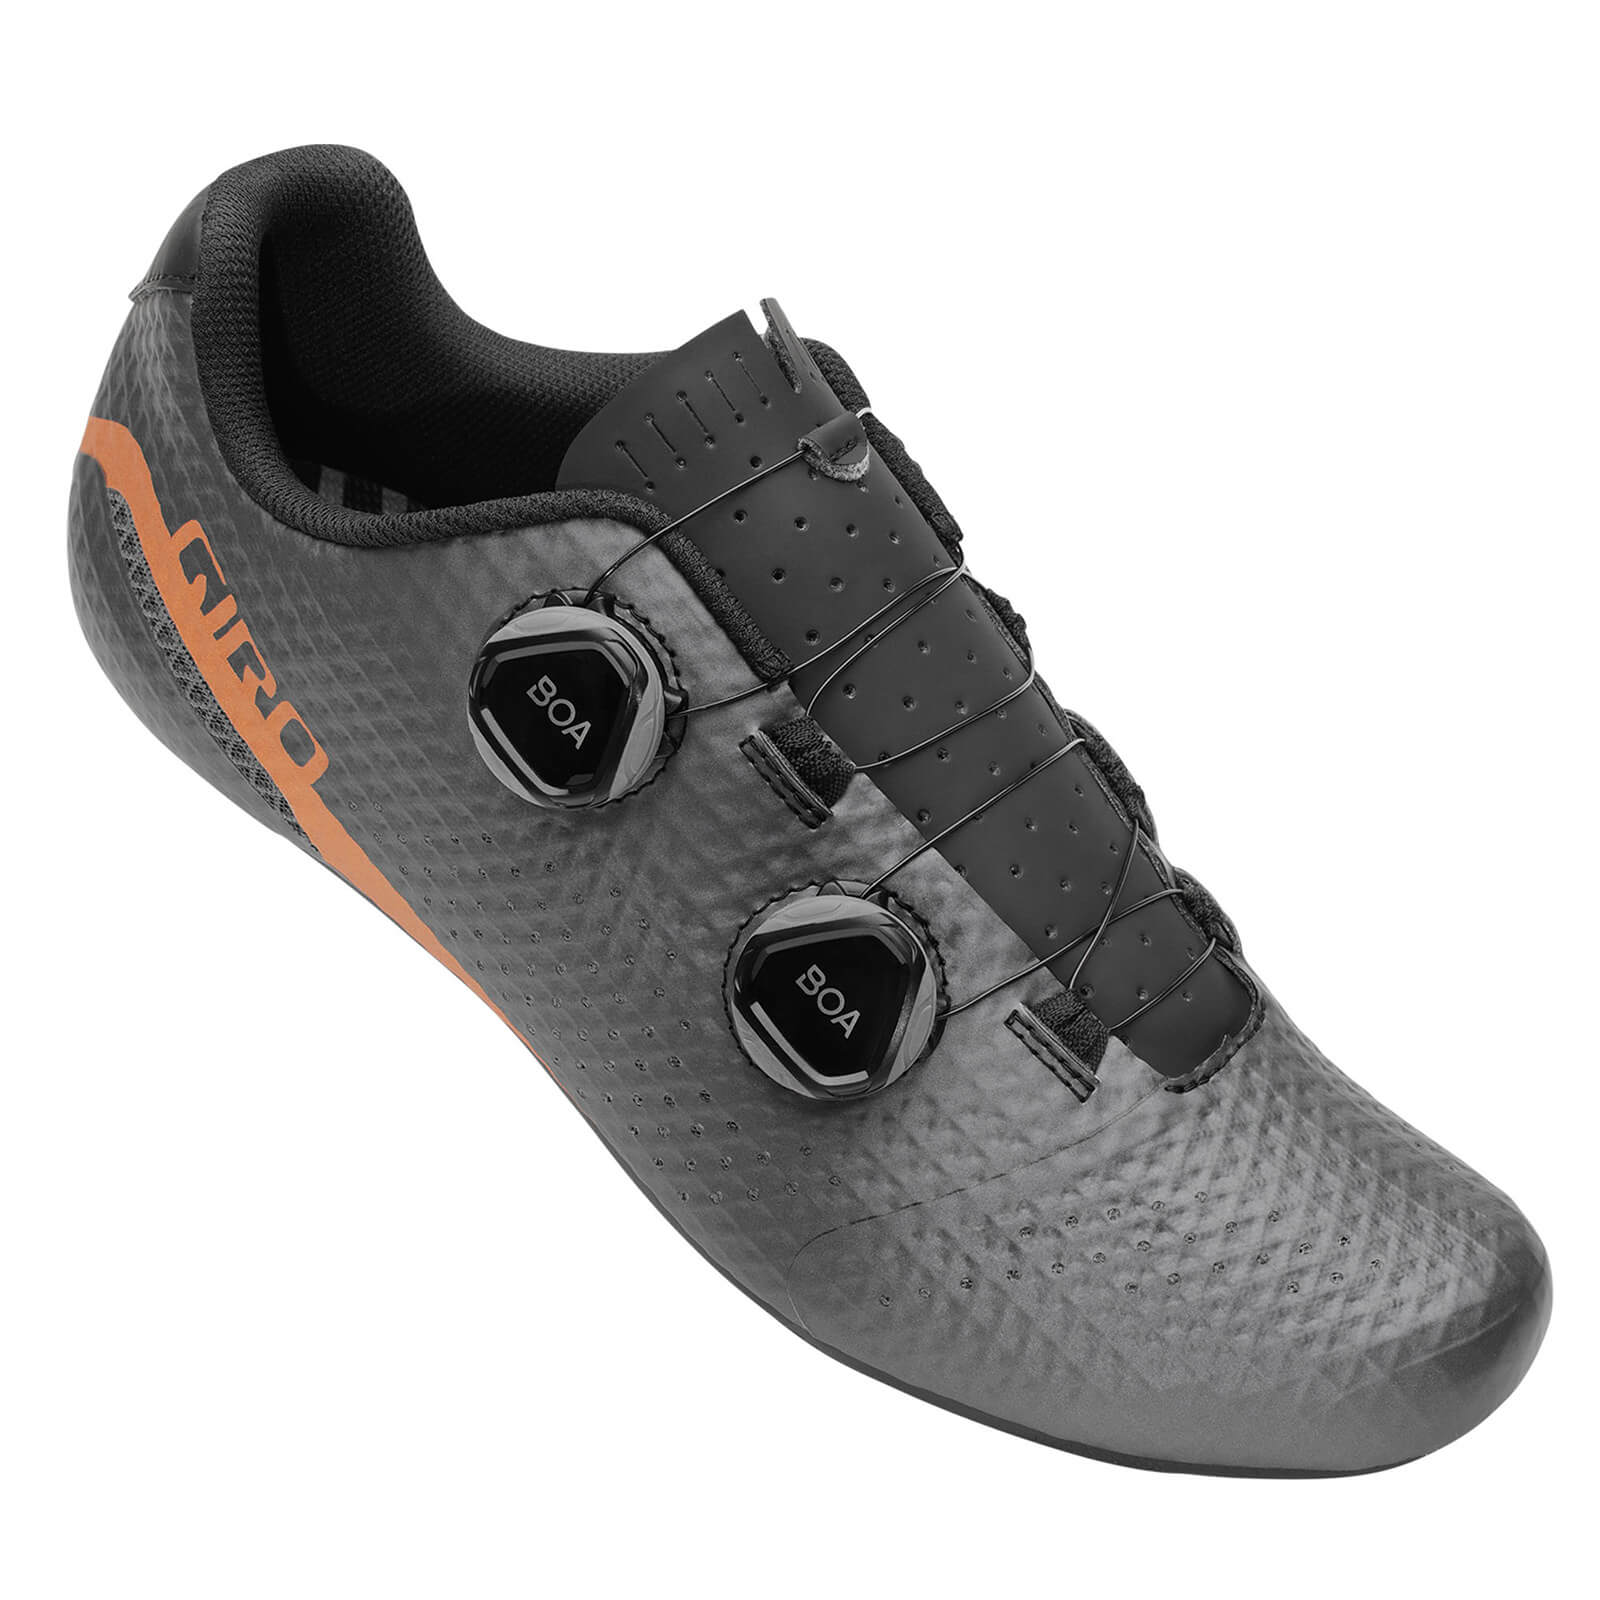 Giro Regime Road Shoe - EU 42 - Black/Copper